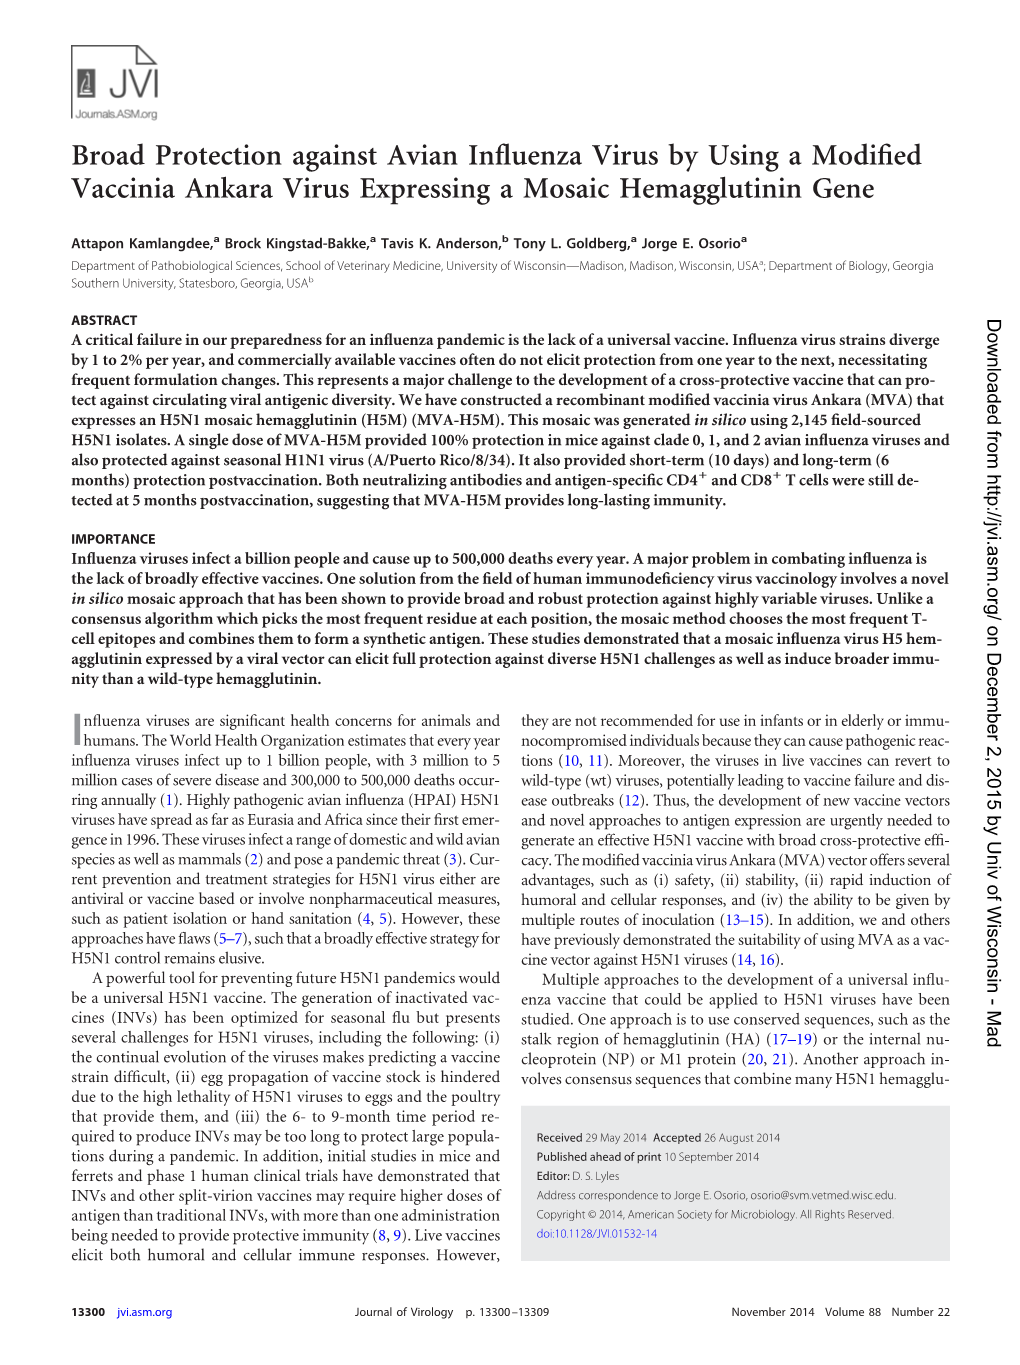 Broad Protection Against Avian Influenza Virus by Using a Modified Vaccinia Ankara Virus Expressing a Mosaic Hemagglutinin Gene